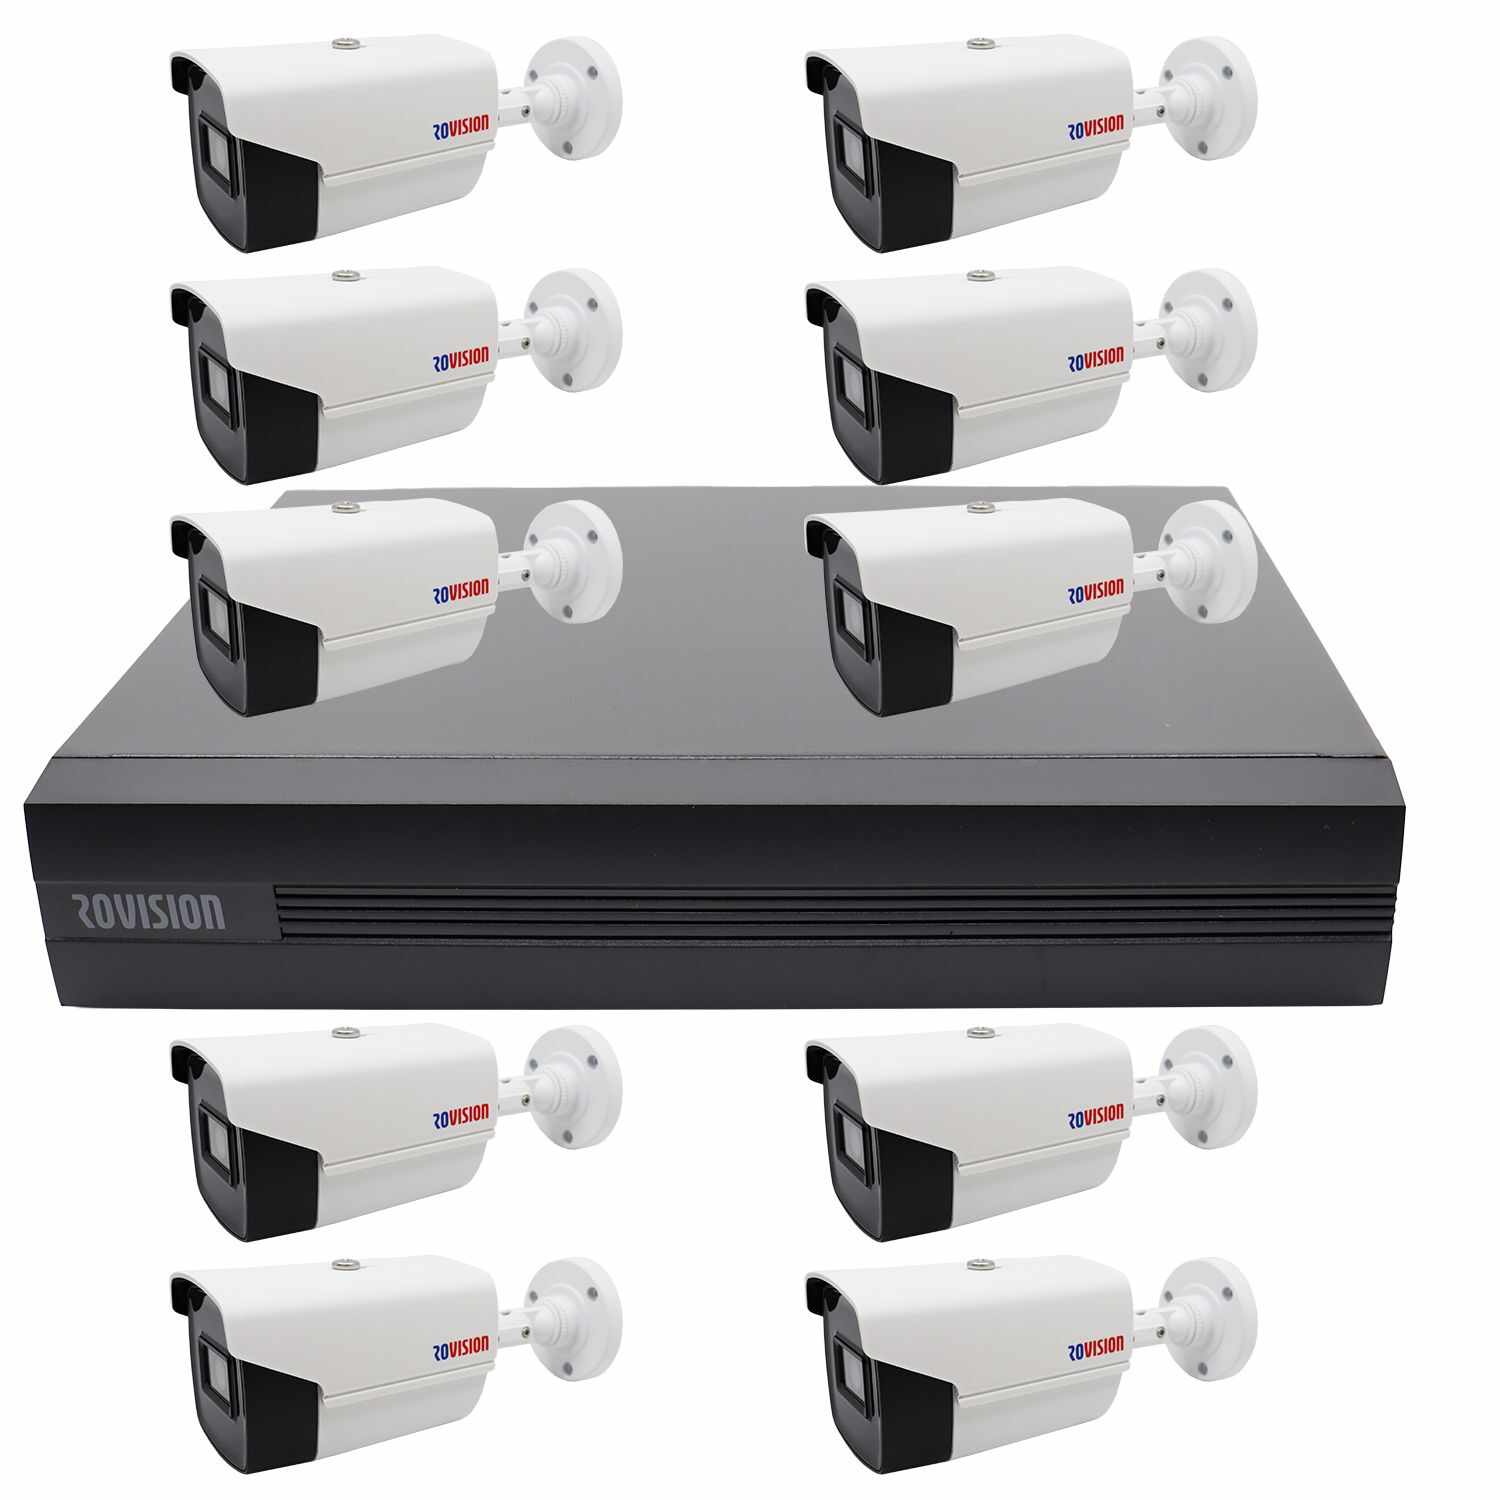 Sistem de supraveghere 10 camere Rovision oem Hikvision 2MP Full HD, IR 40m, DVR Pentabrid 16 canale, inteligenta artificiala